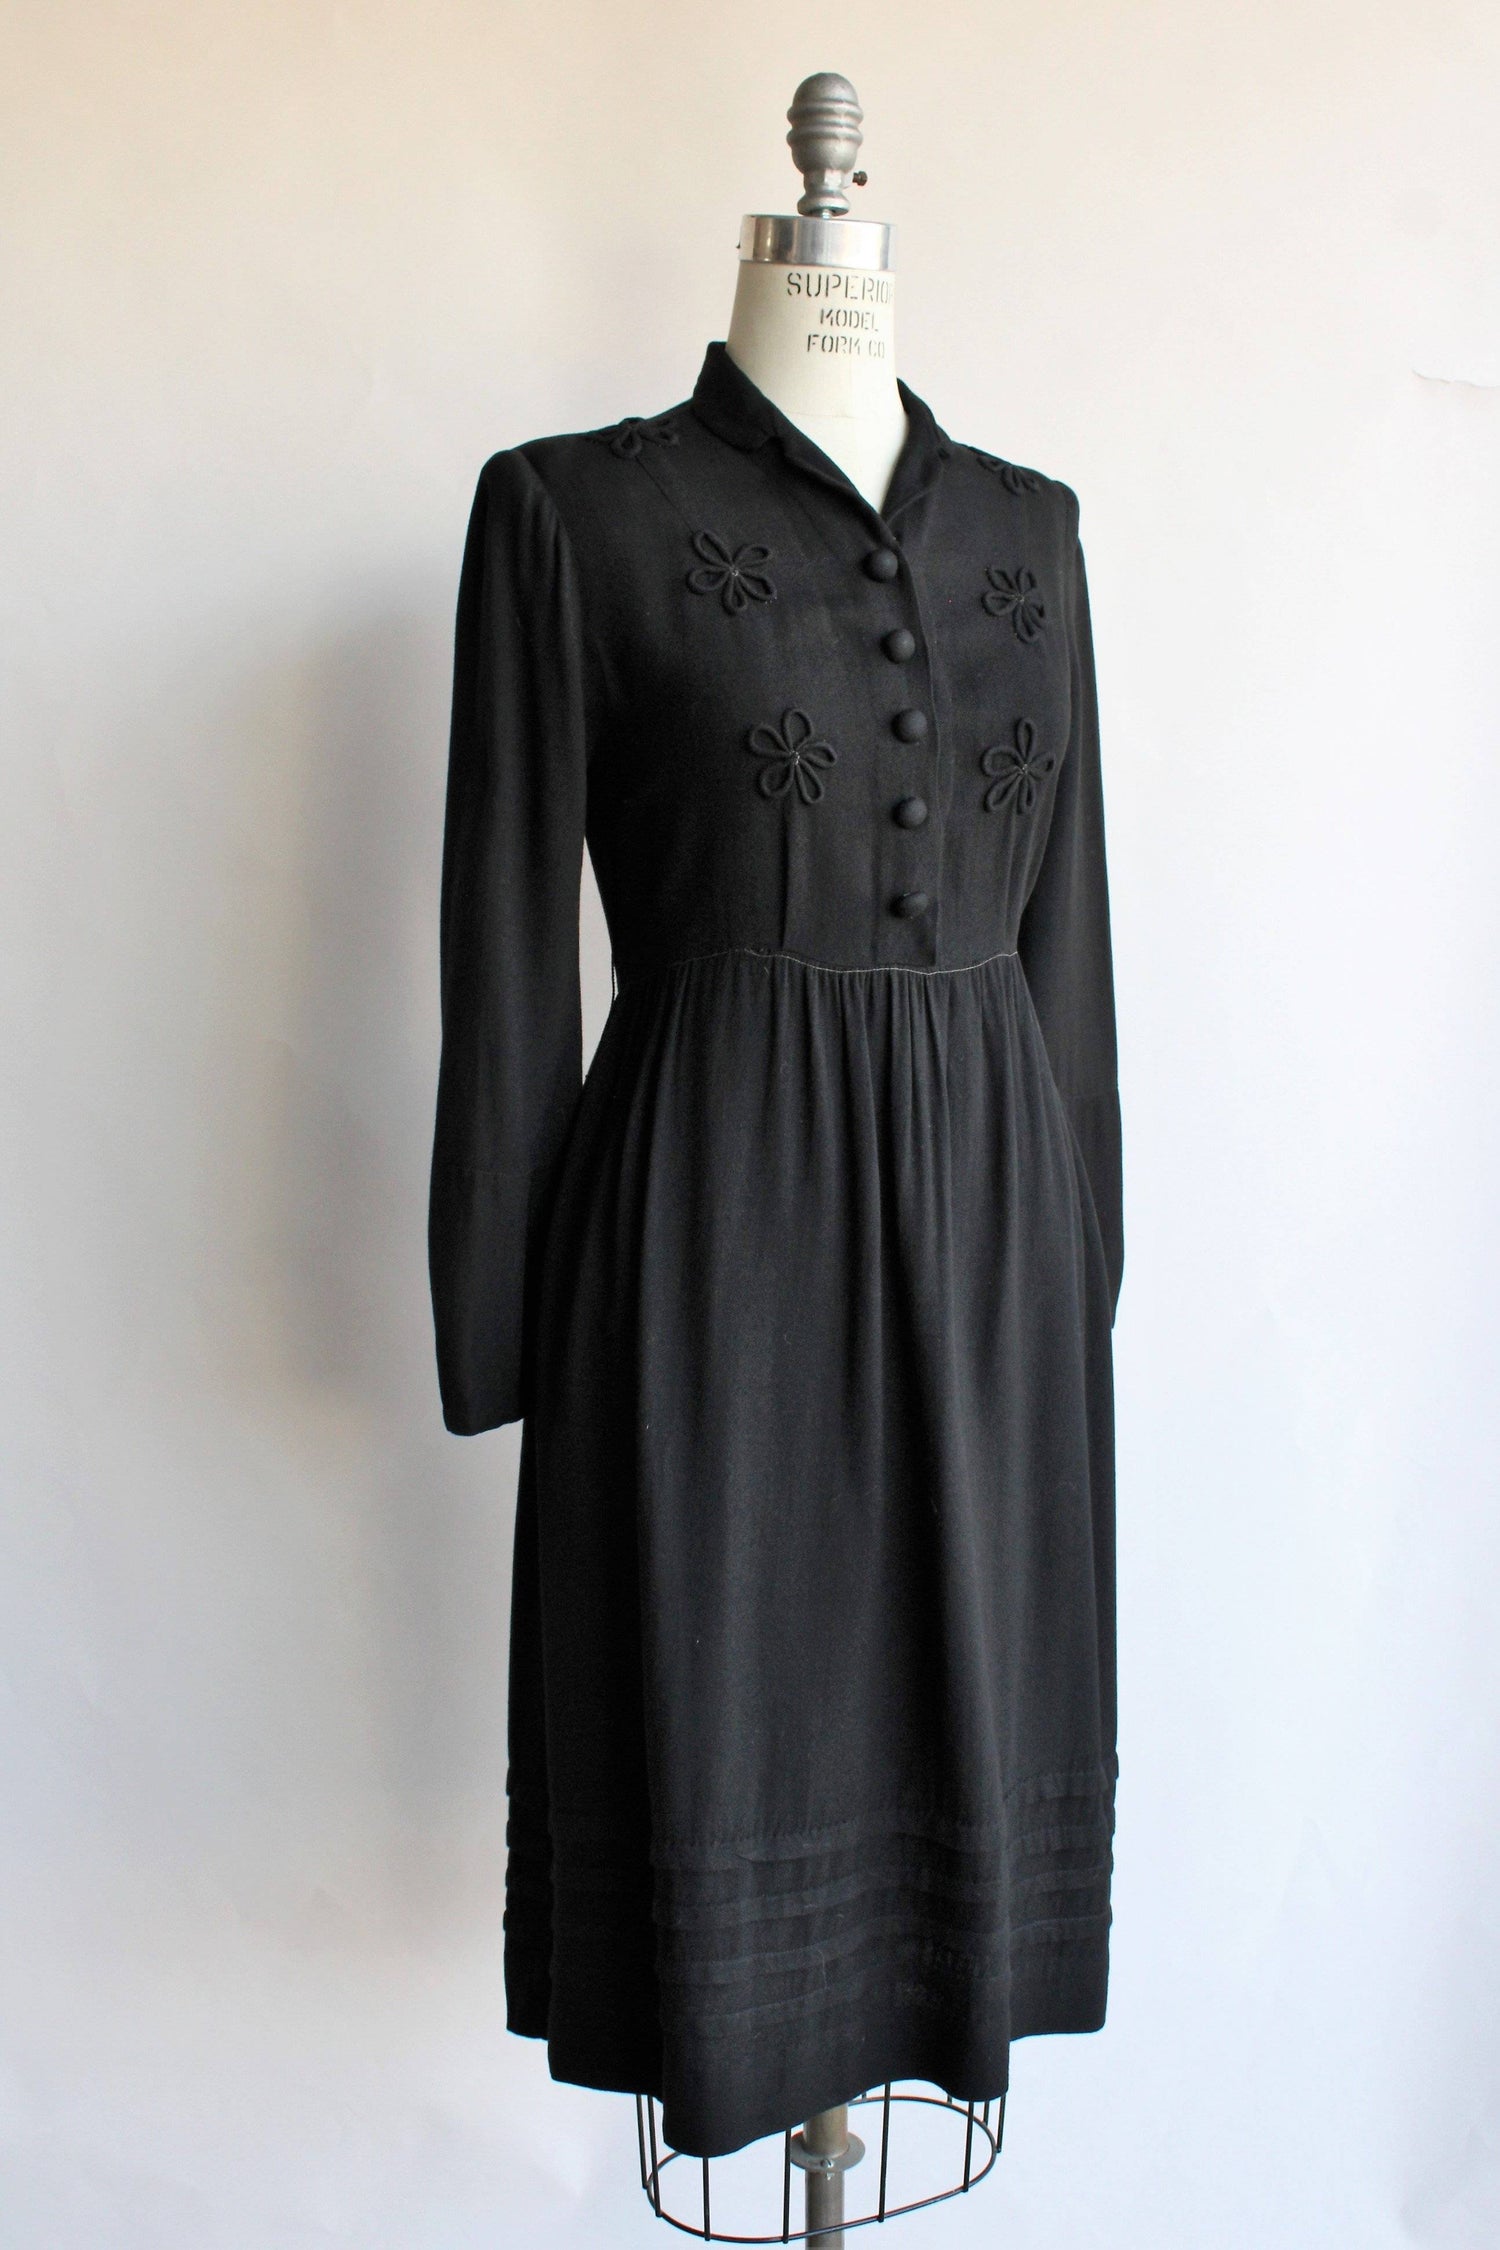 Black Applique Flower Dress Costume Sewing Vintage 1940 - The